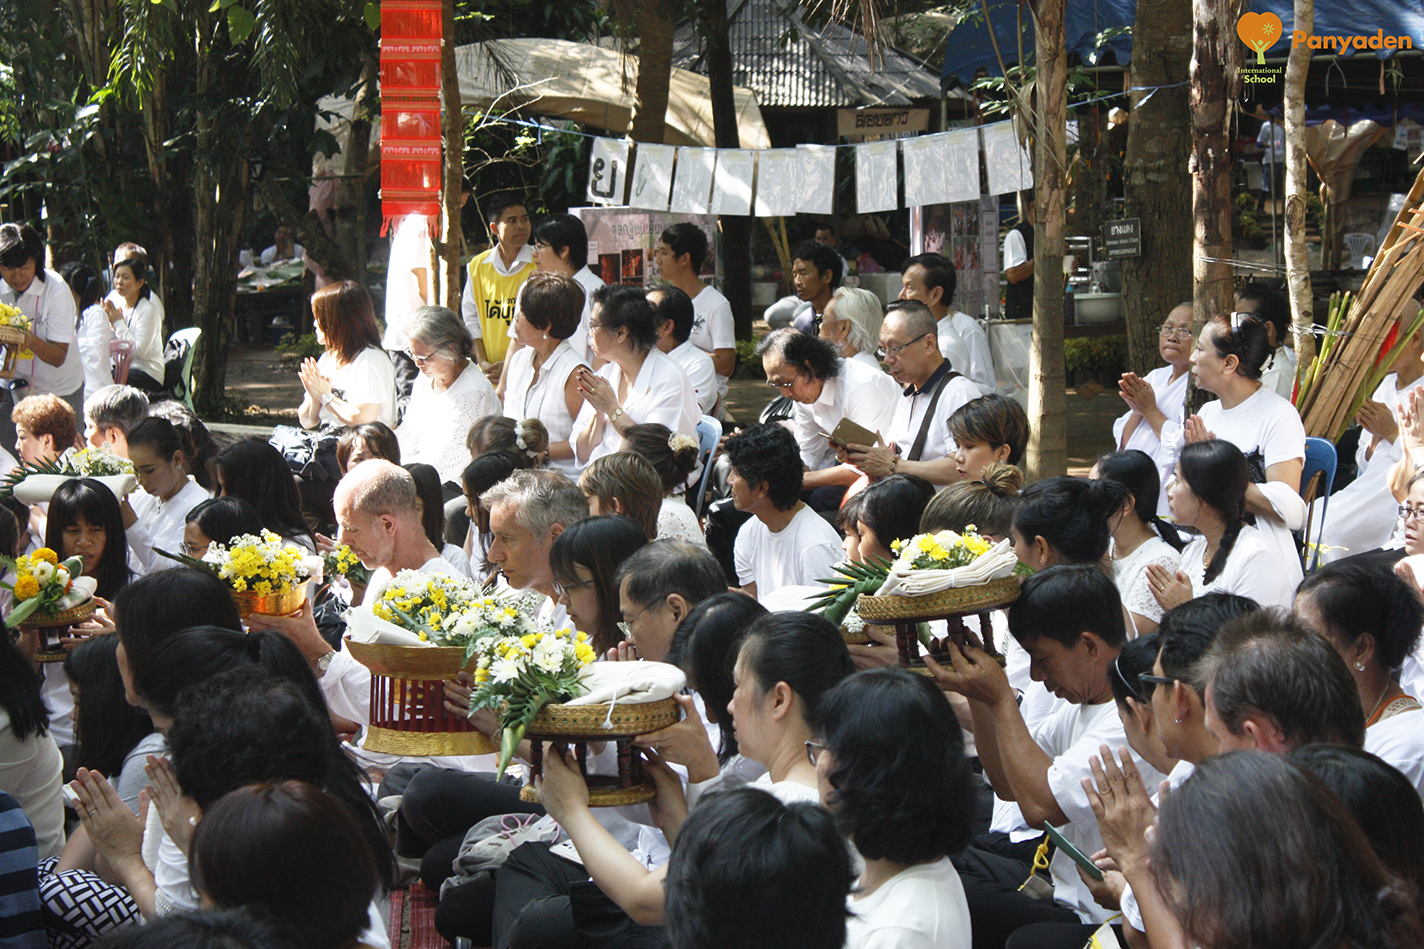 Offerings to monks, Panyaden at Jula Khatina in Chiang Rai